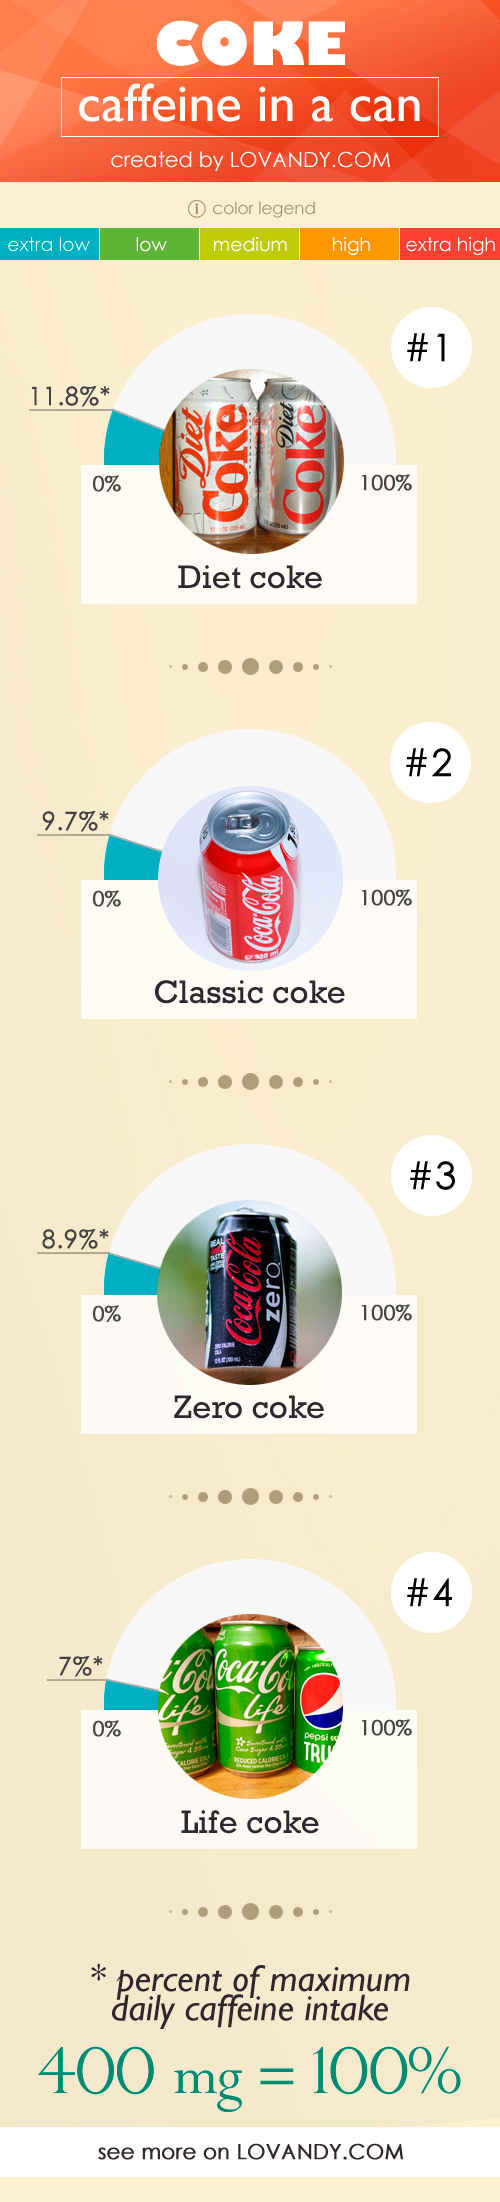 does diet coke have caffeine